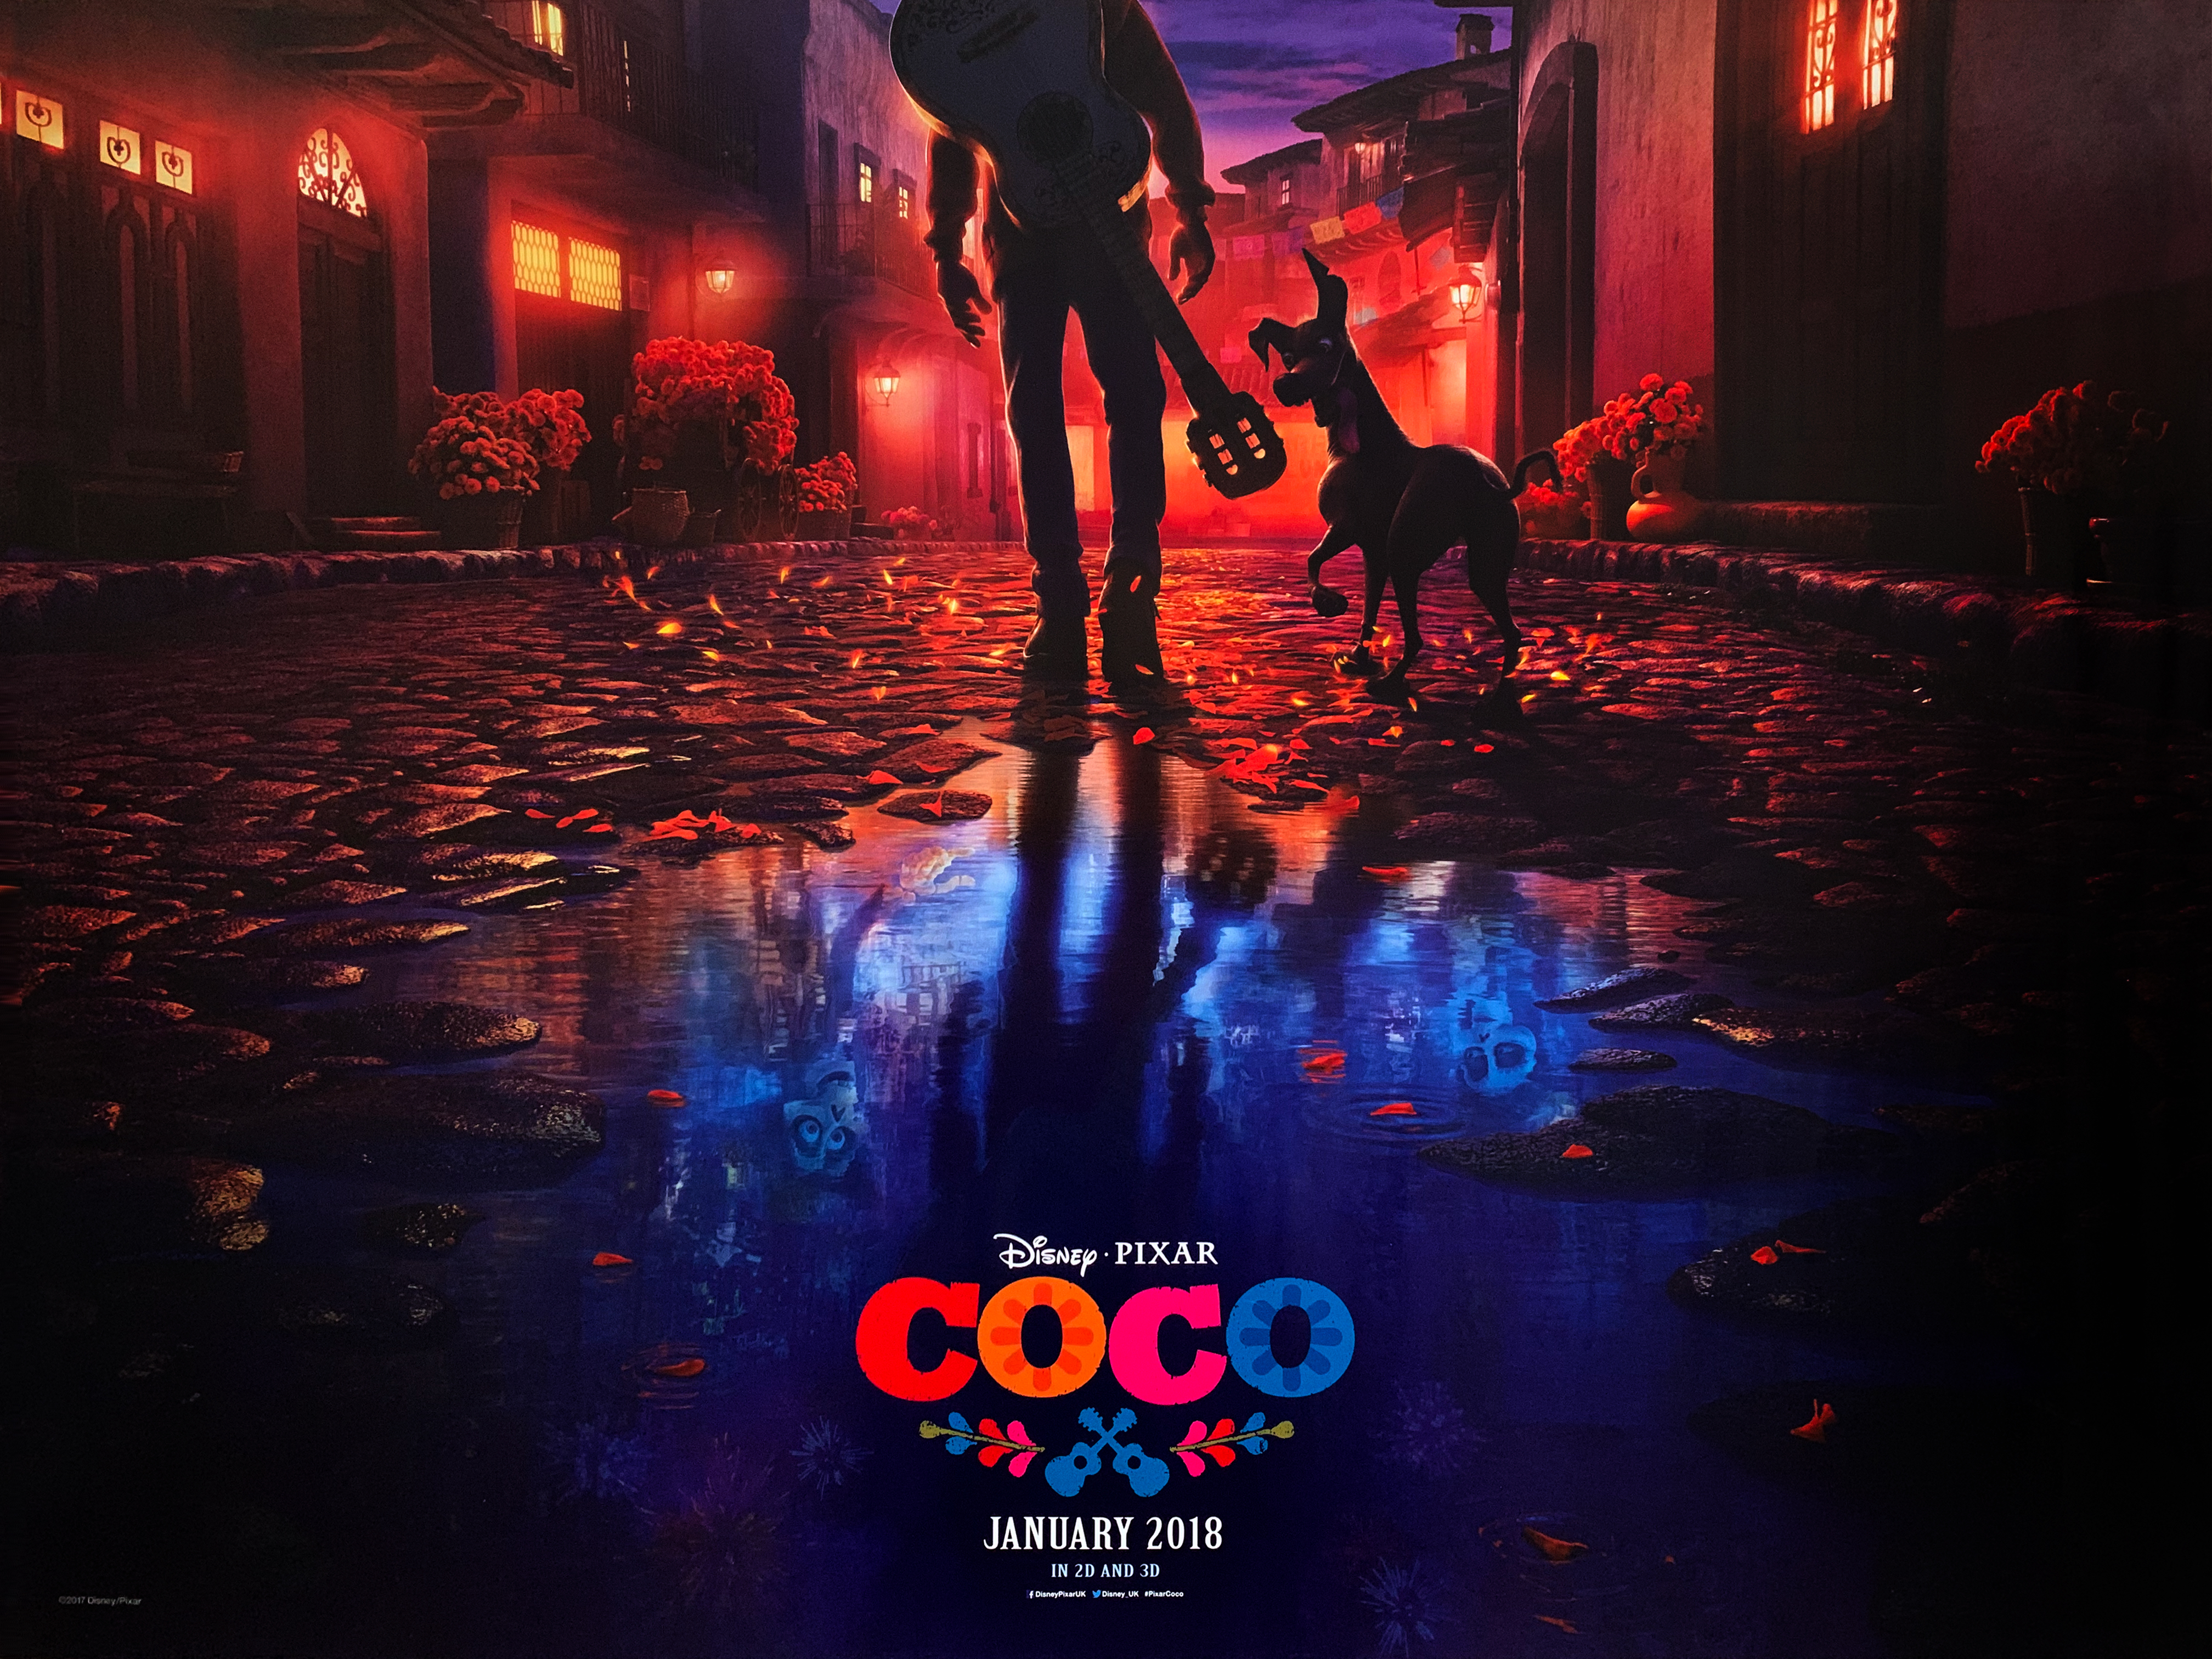 Pixar's Coco advance movie quad poster